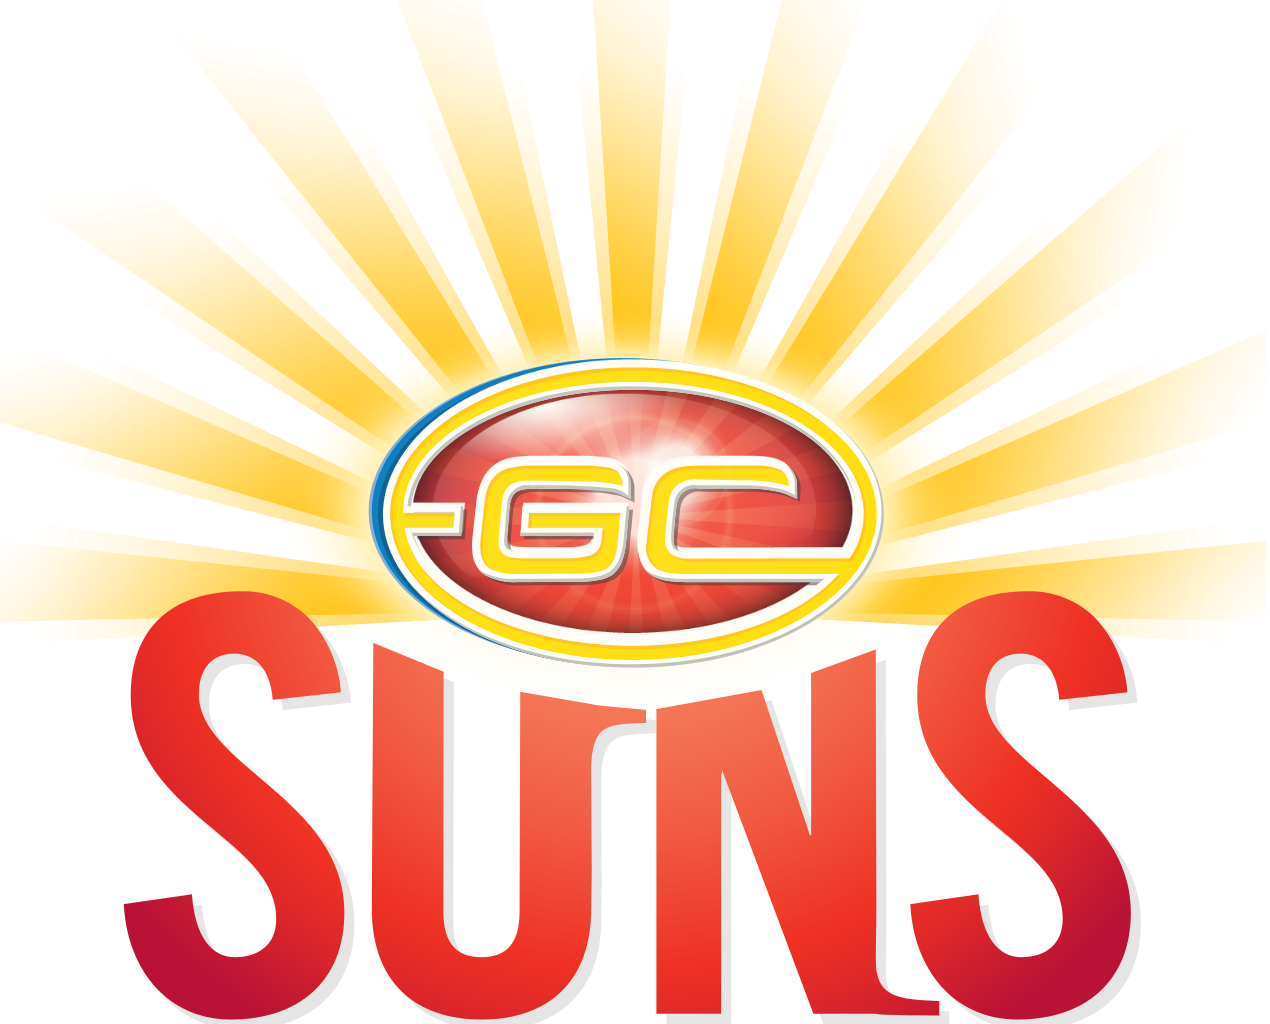 1270Px Gold Coast Suns Logo.png - Basic Sun, Transparent background PNG HD thumbnail